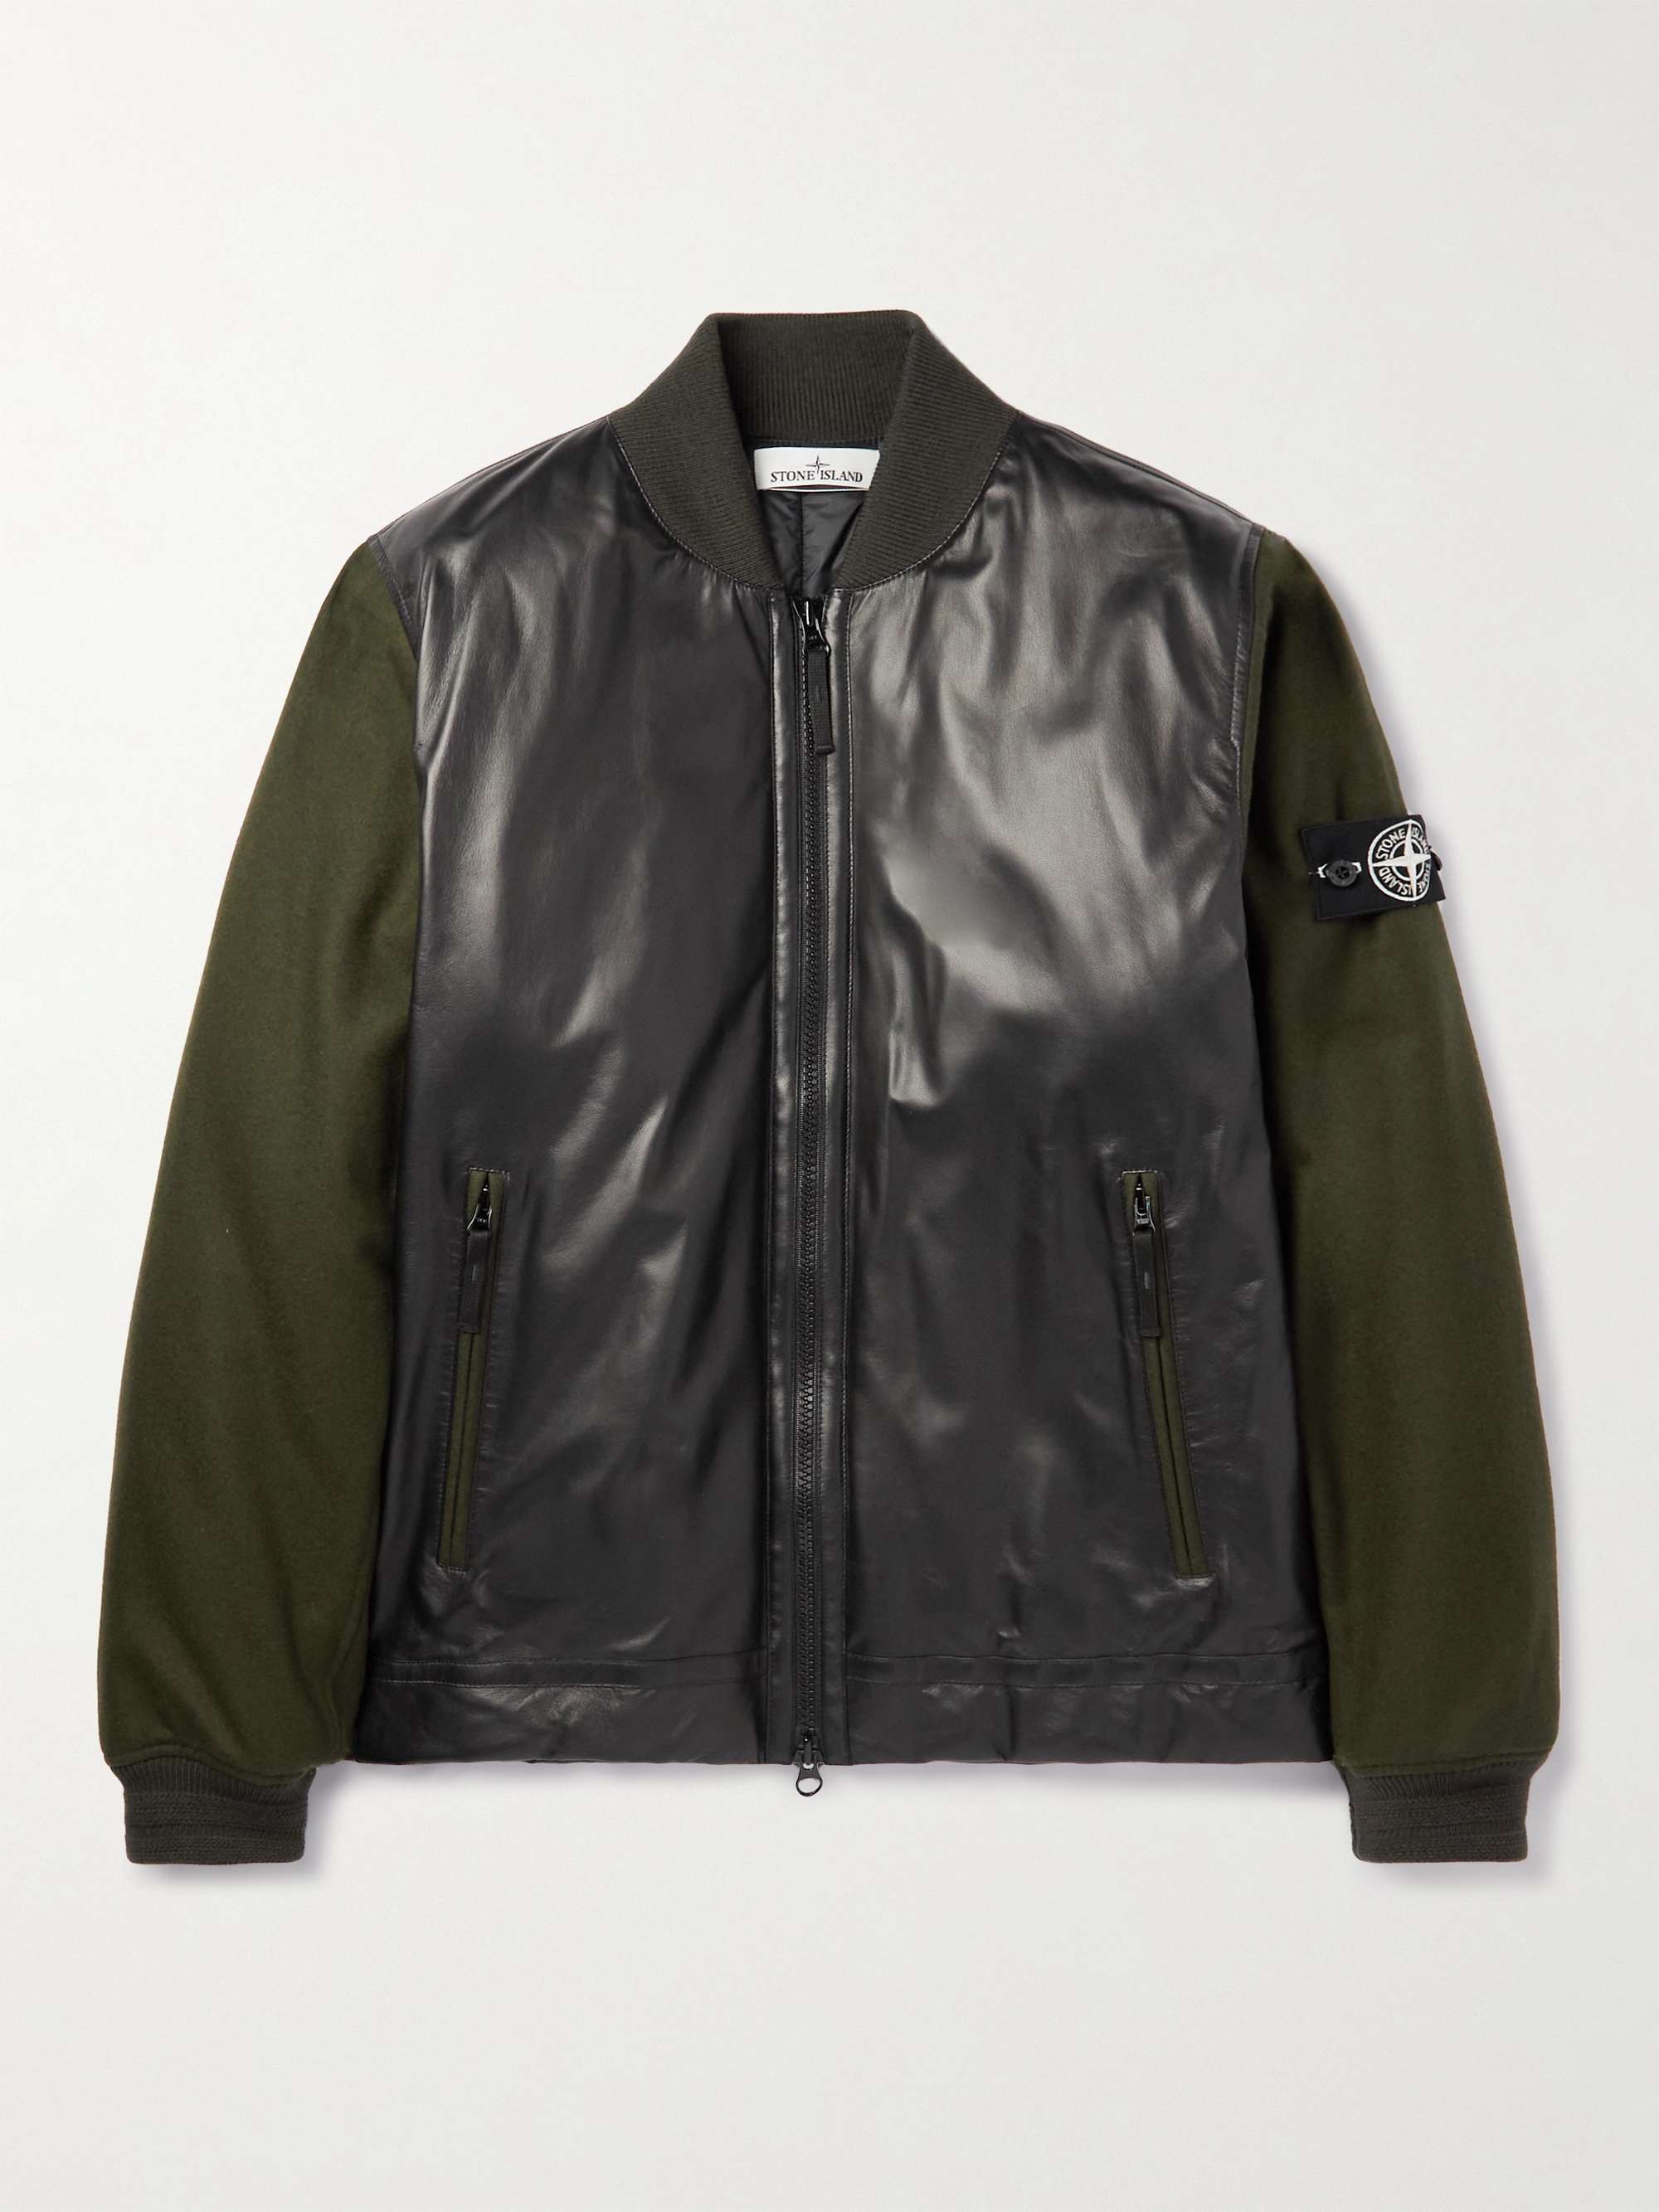 STONE ISLAND Logo-Print PrimaLoft Leather and Wool-Blend Bomber Jacket